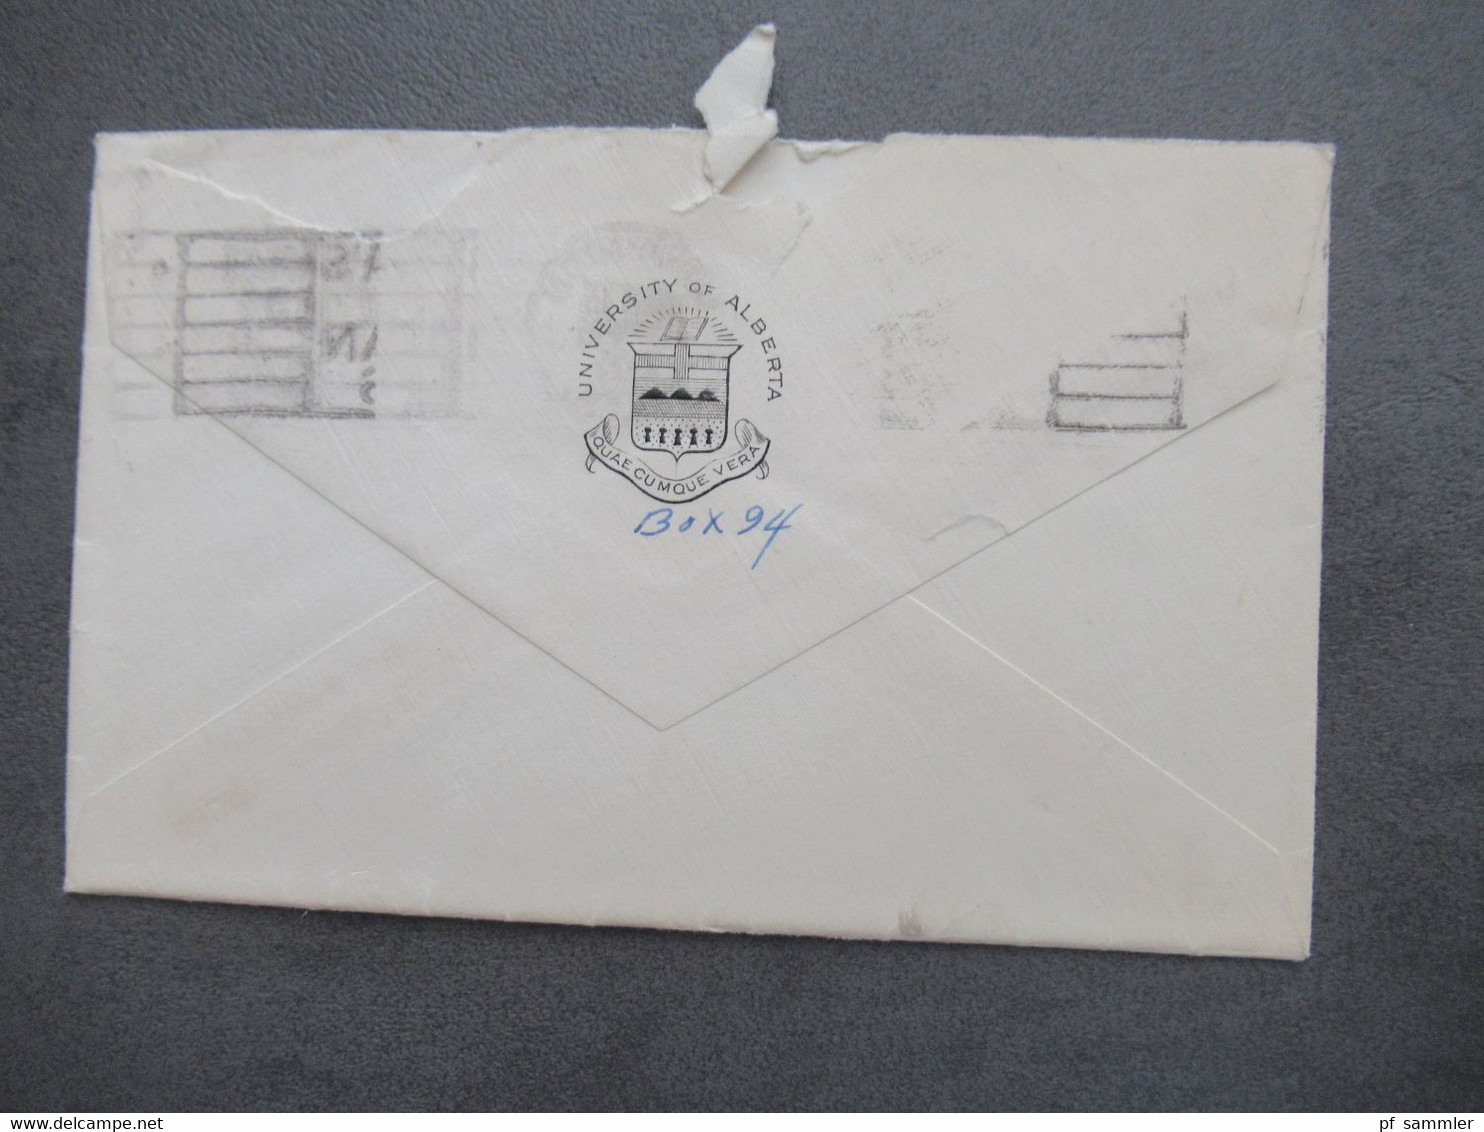 Kanada 1940 Air Mail Letter Umschlag University Of Alberta Quae Cumque Vera Brief Nach Hanover New Hamphsire - Briefe U. Dokumente